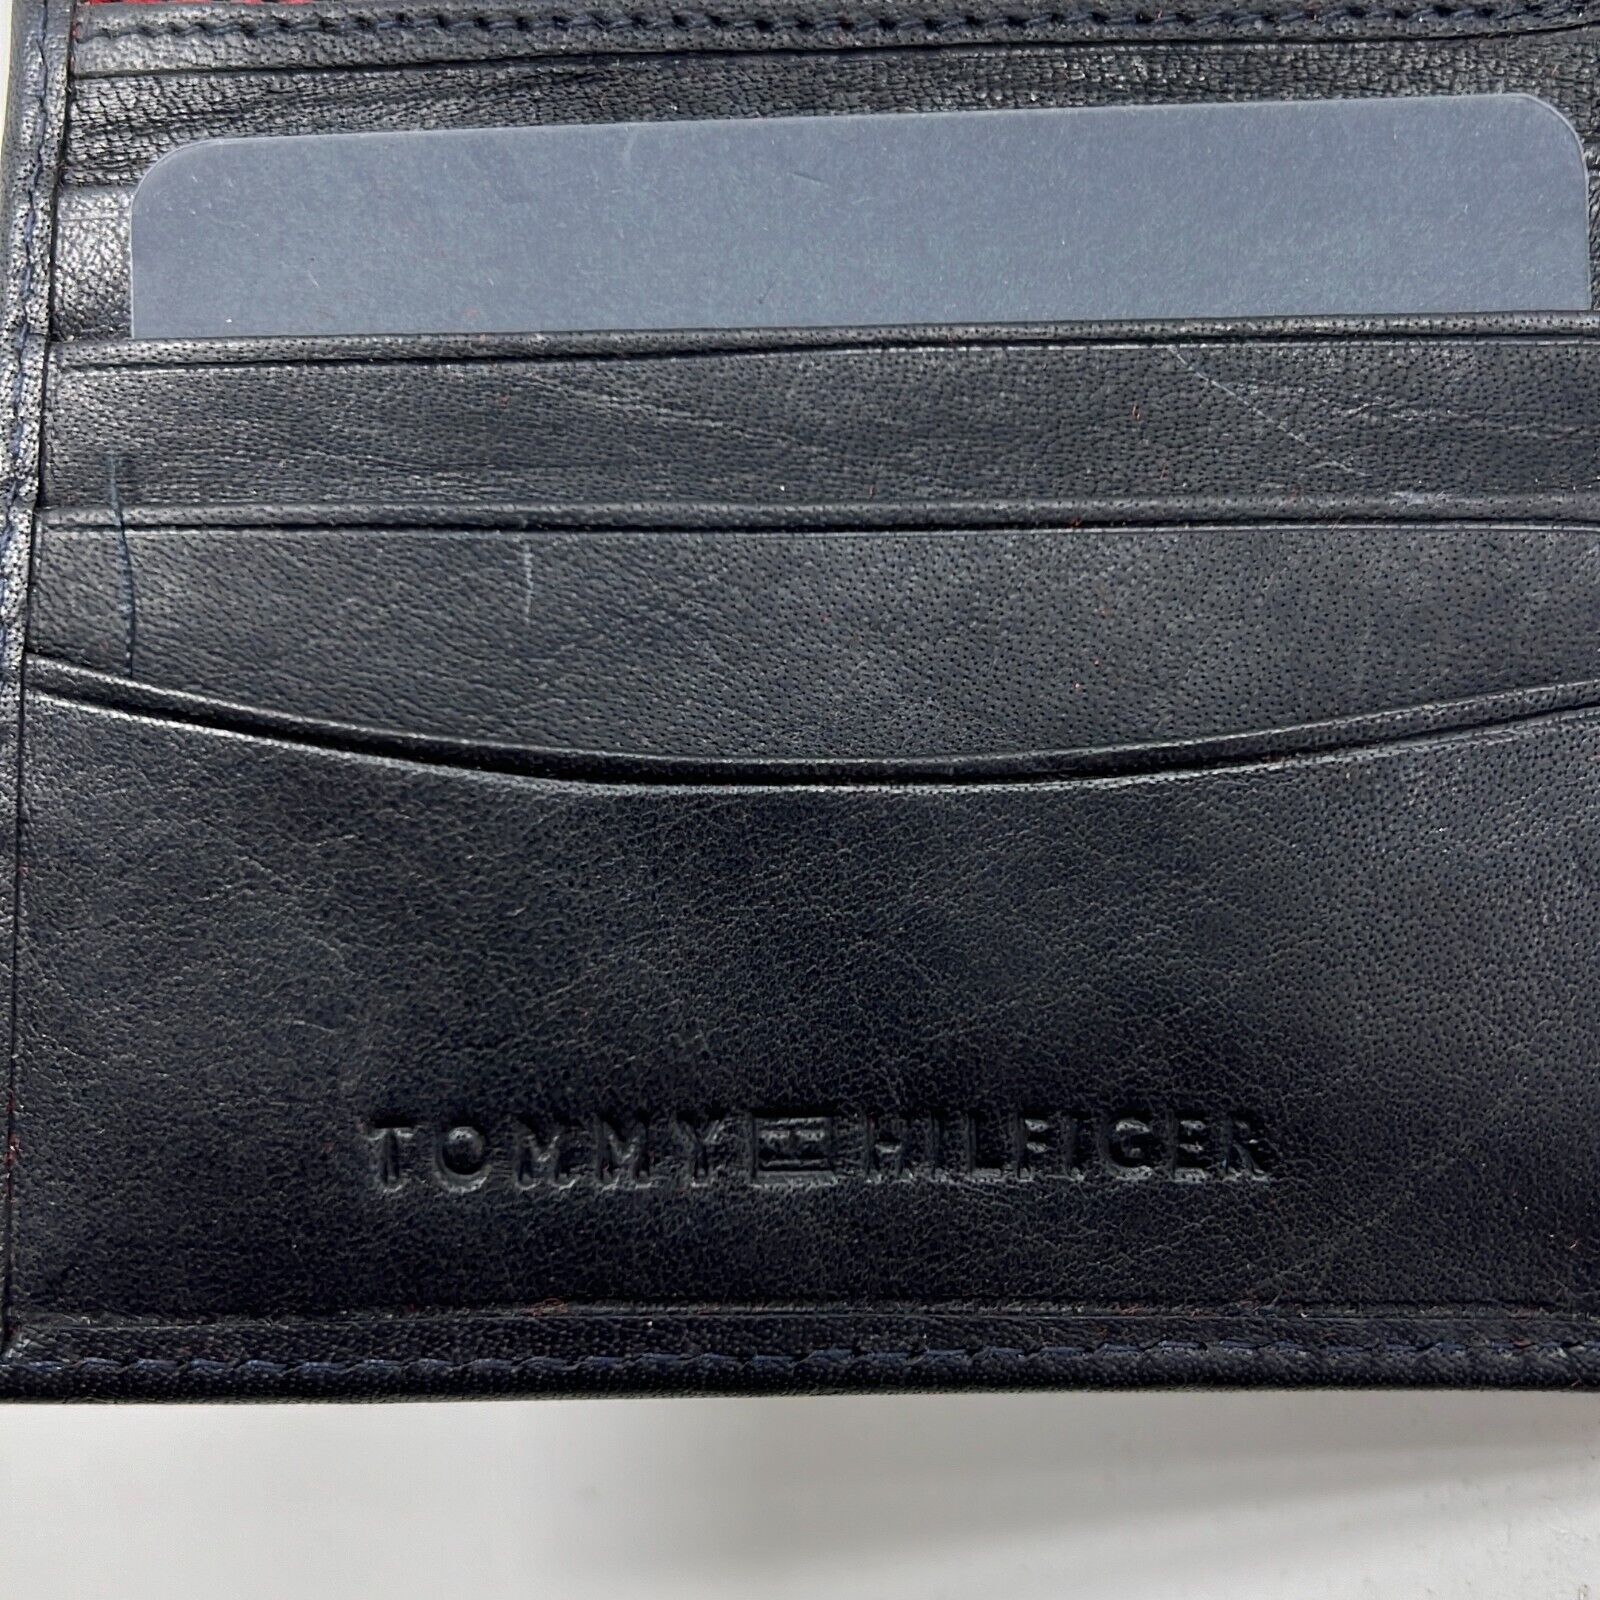 Tommy Hilfiger Men's Black Leather Passcase Bi-Fold Wallet w/ RFID Blocking